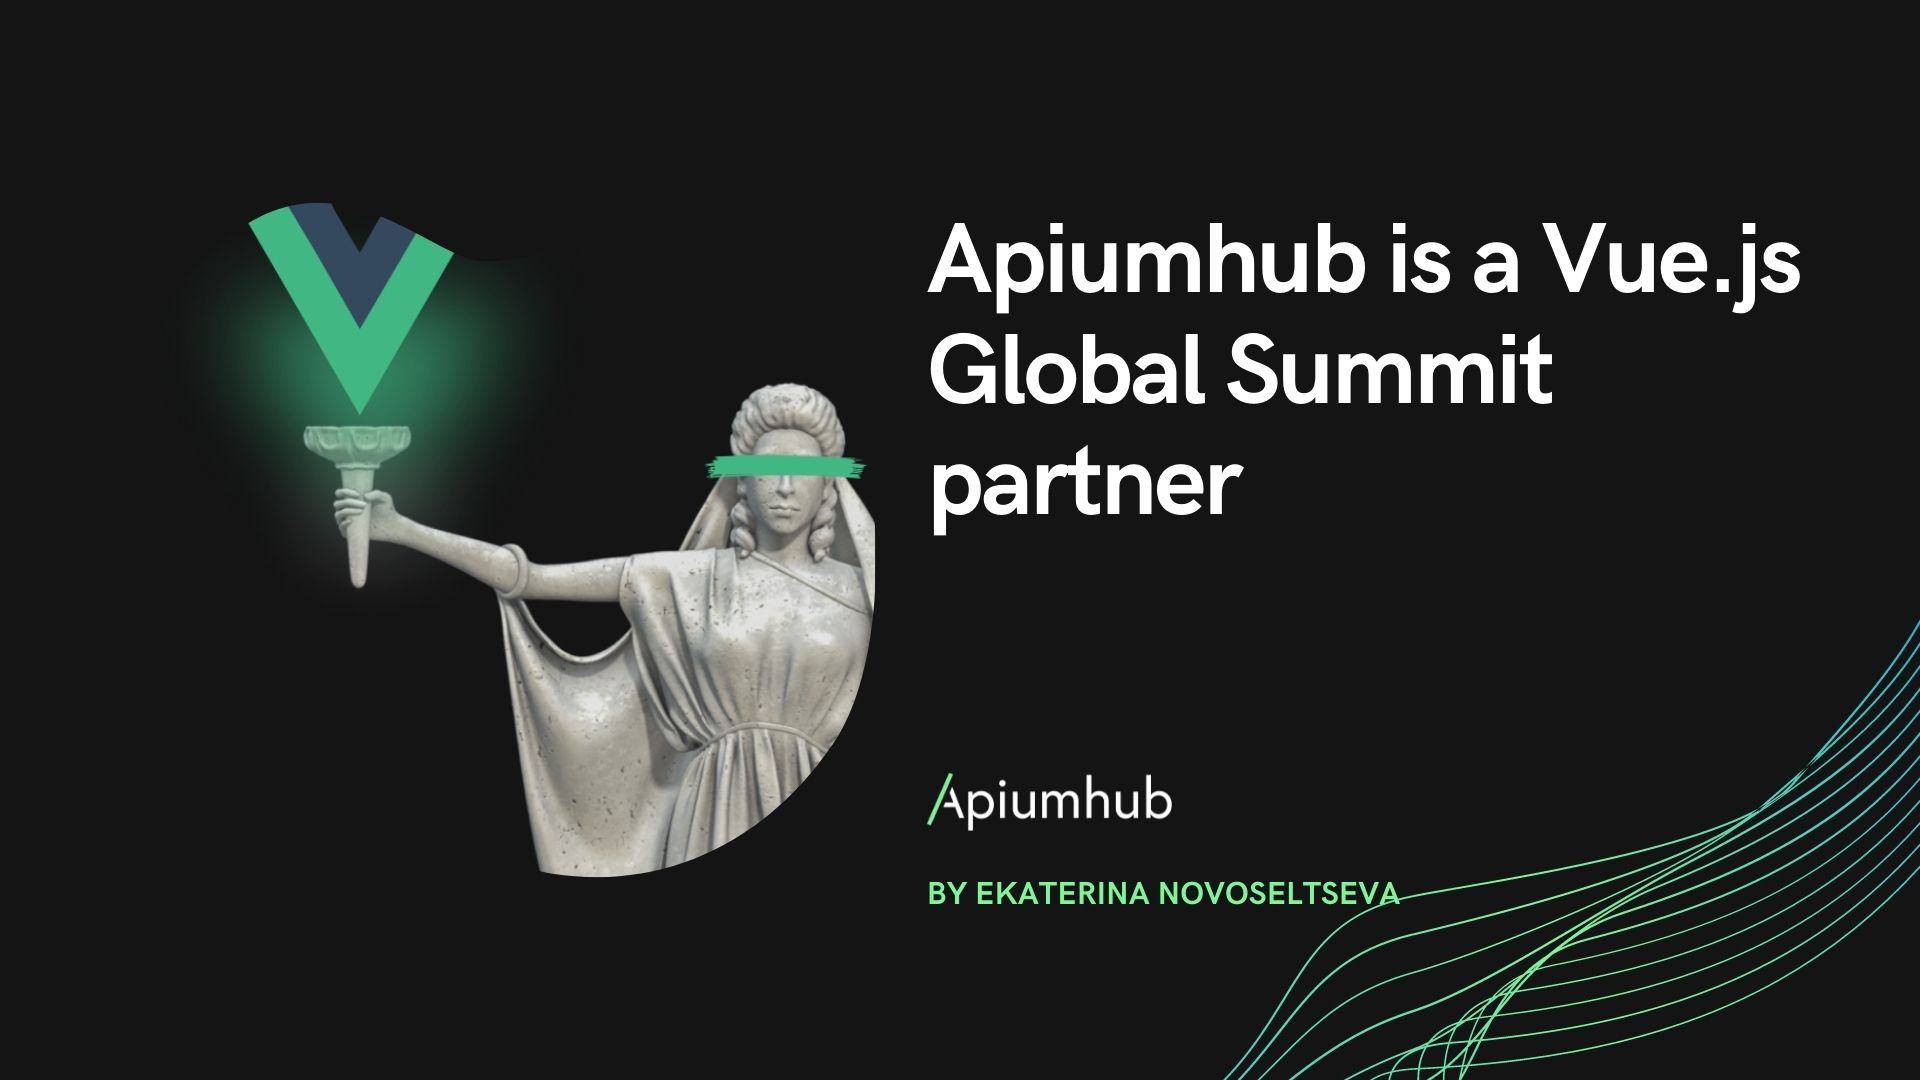 Apiumhub is a Vue.js Global Summit partner